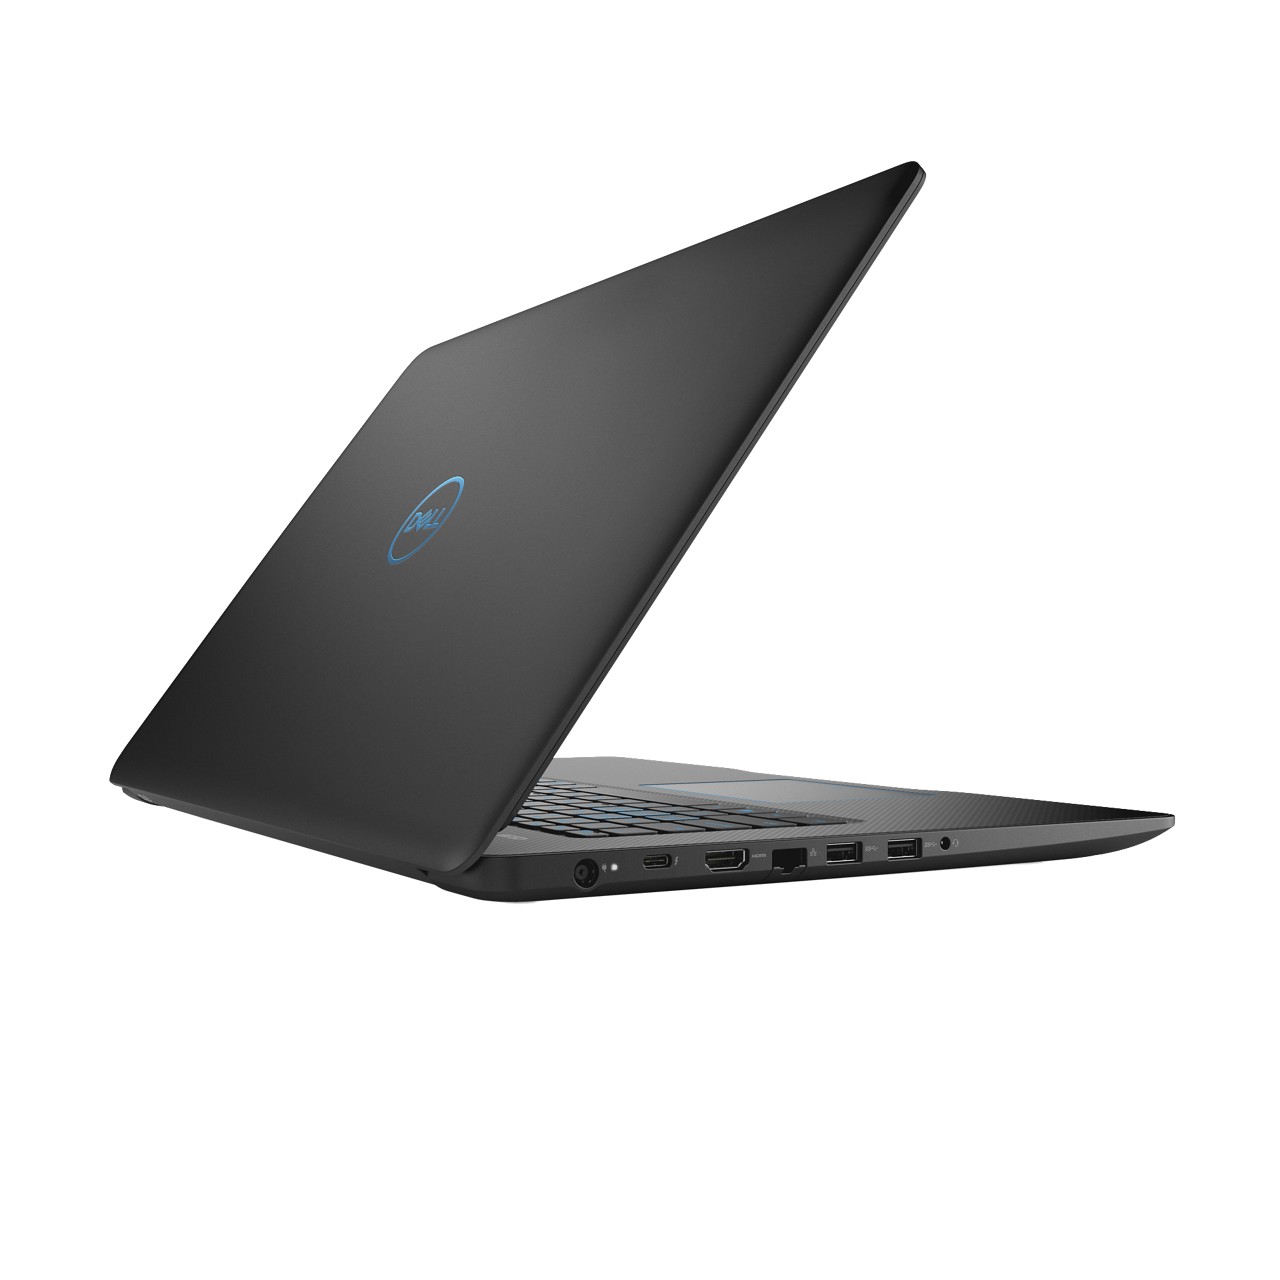 Dell G3 Gaming Laptop 17.3" Intel Core i7-8750H, NVIDIA GeForce GTX 1050Ti, 16GB RAM, 128GB SSD + 1TB HDD WIN 10, G3779-7927BLK-PUS - image 4 of 8